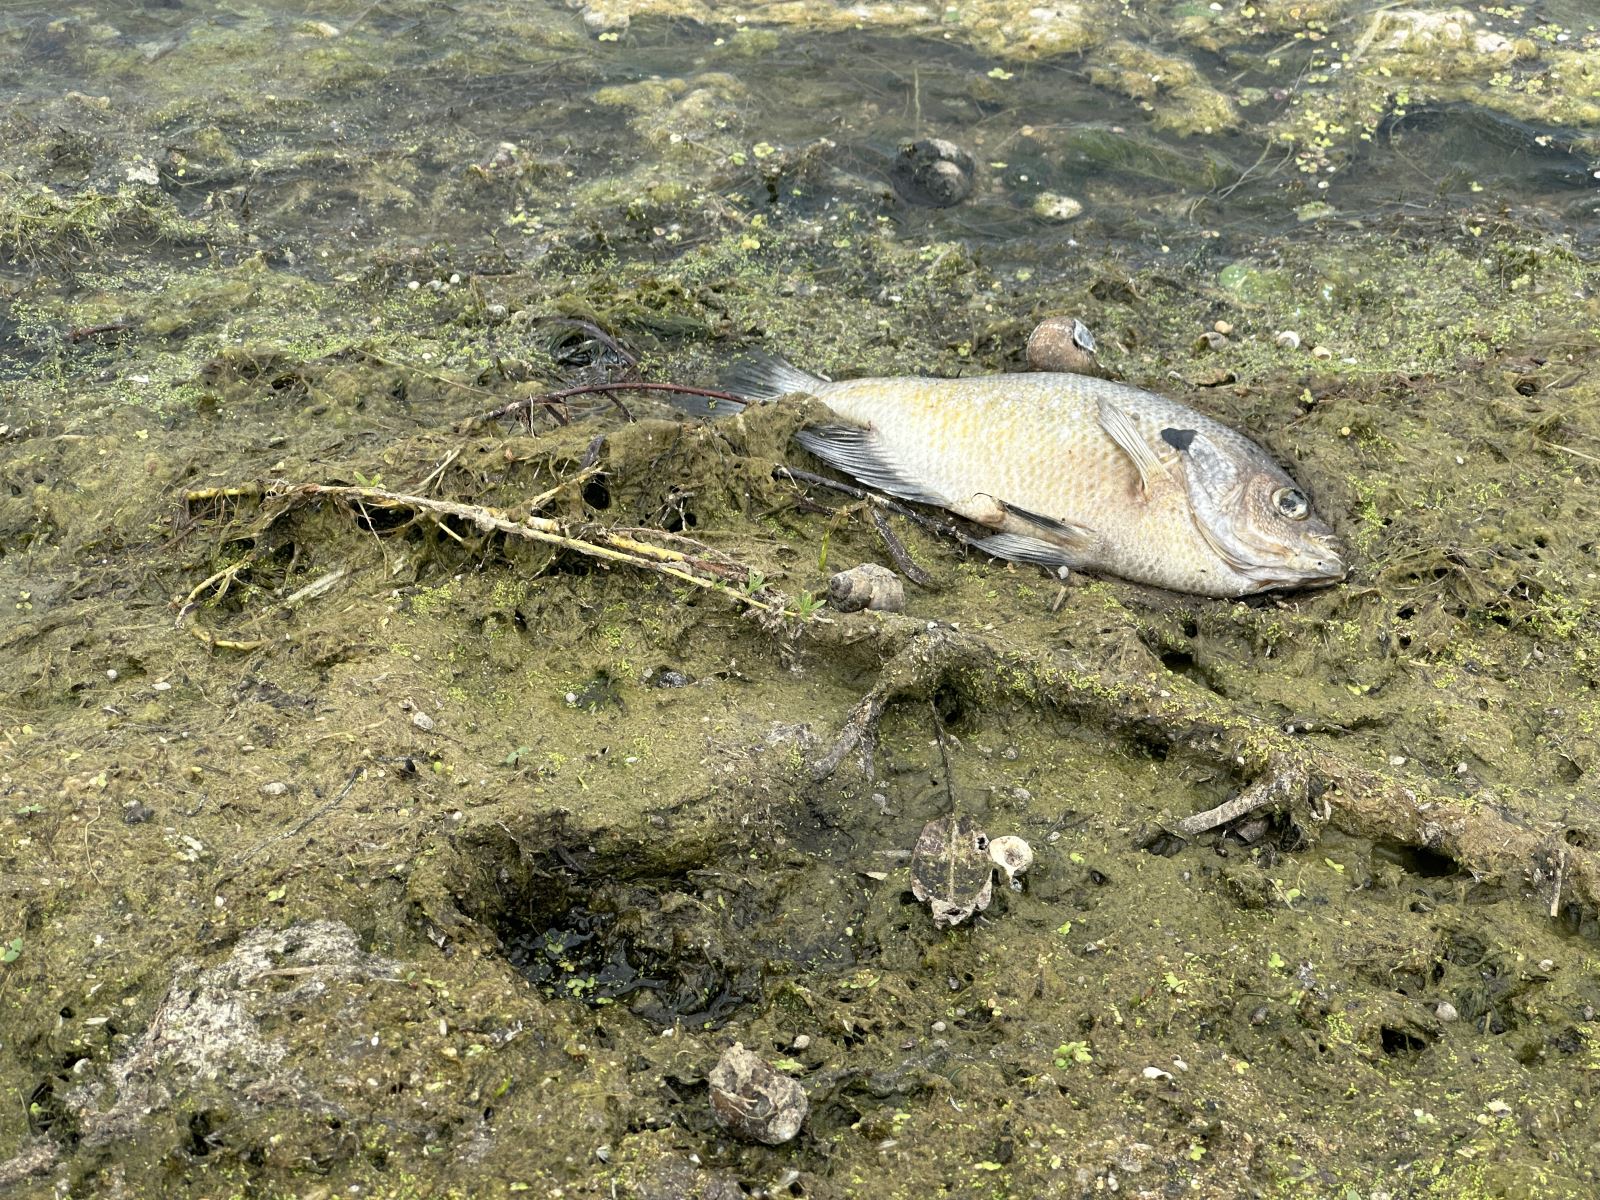 Dead fish laying in algae on shoreline